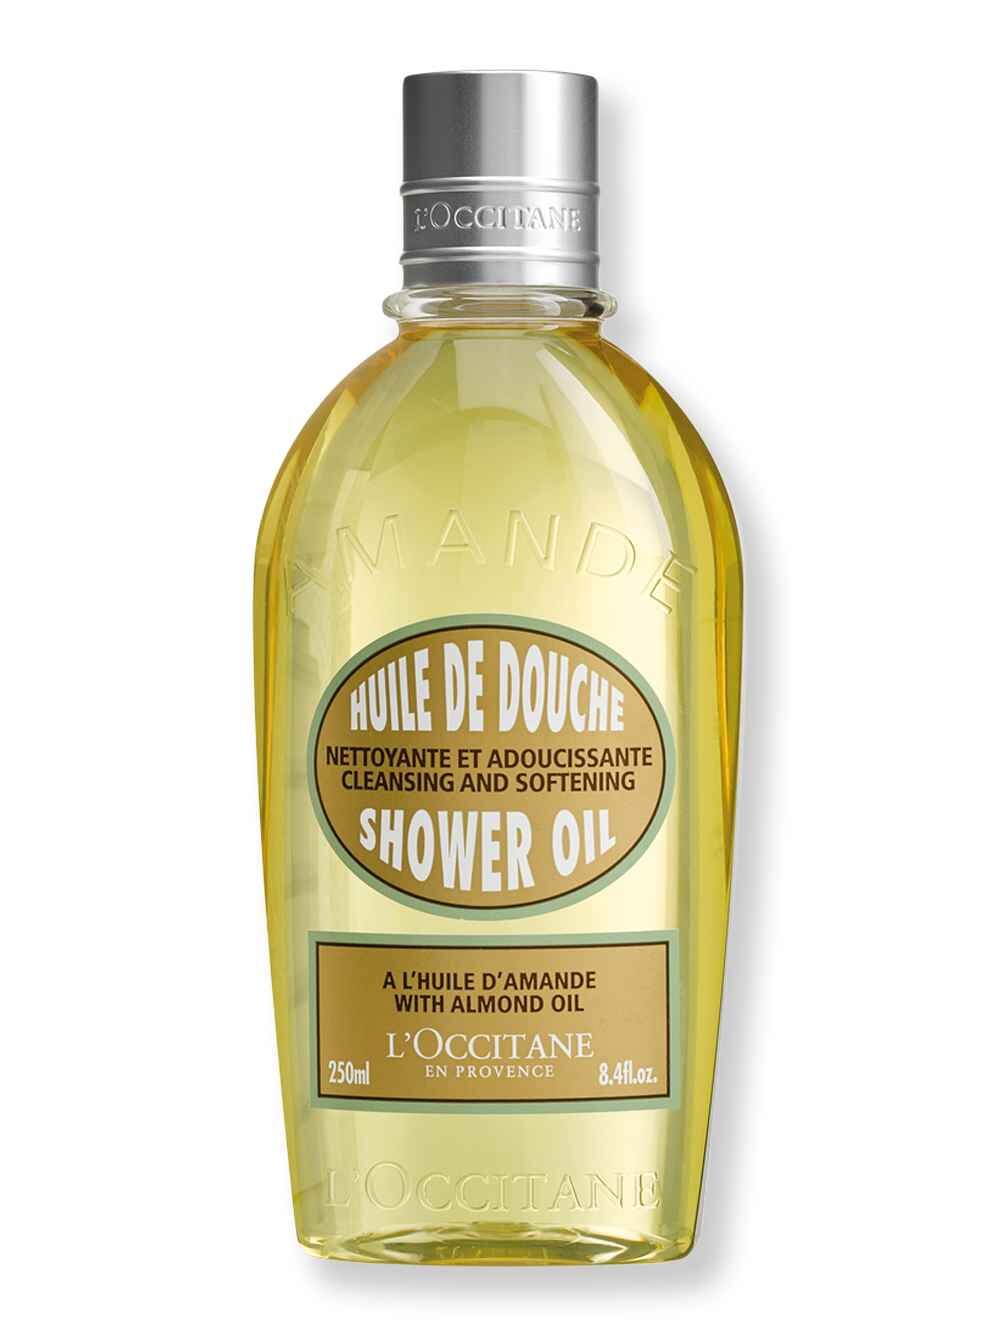 L'Occitane L'Occitane Almond Shower Oil 8.4 fl oz250 ml Body Lotions & Oils 